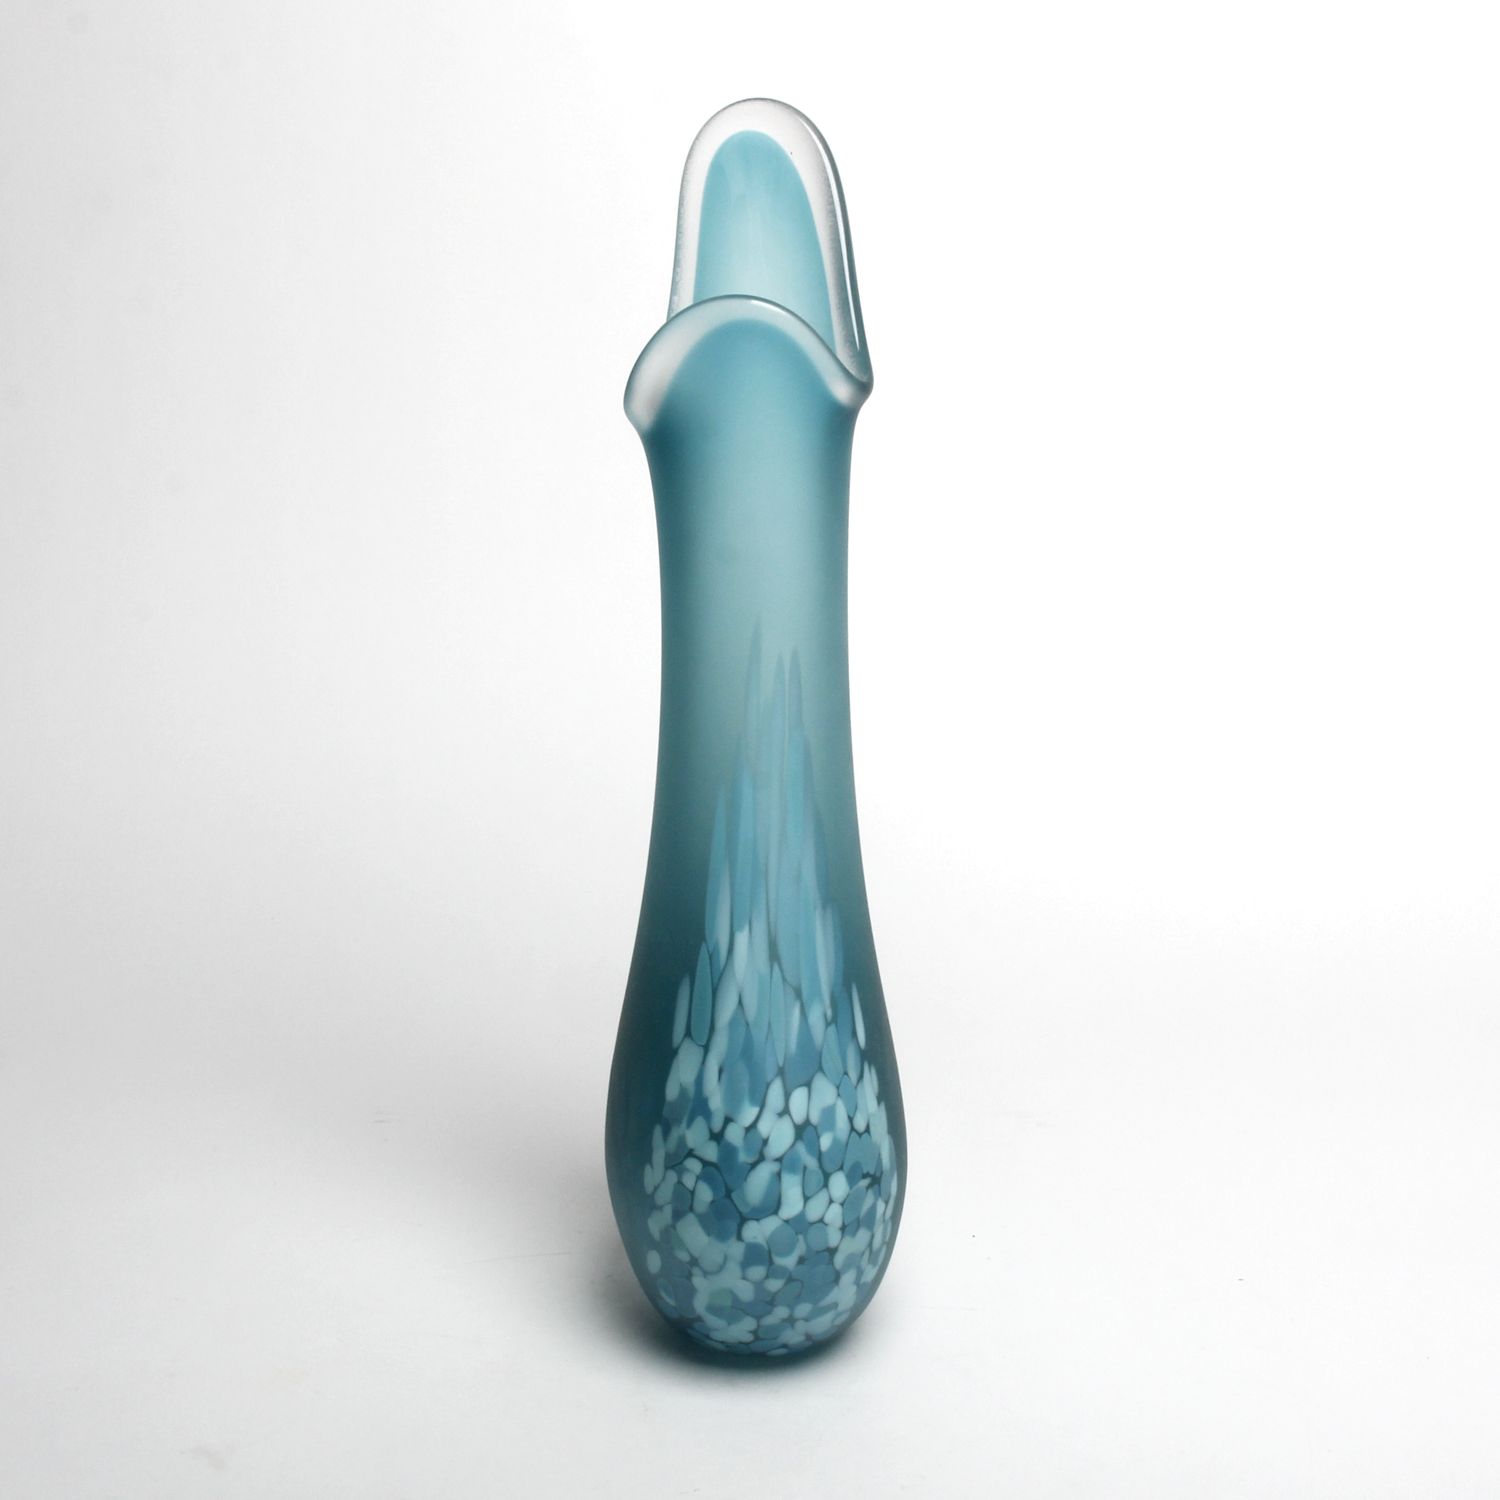 A&M Waddell Hunter: Medium Flava Vase Product Image 2 of 3